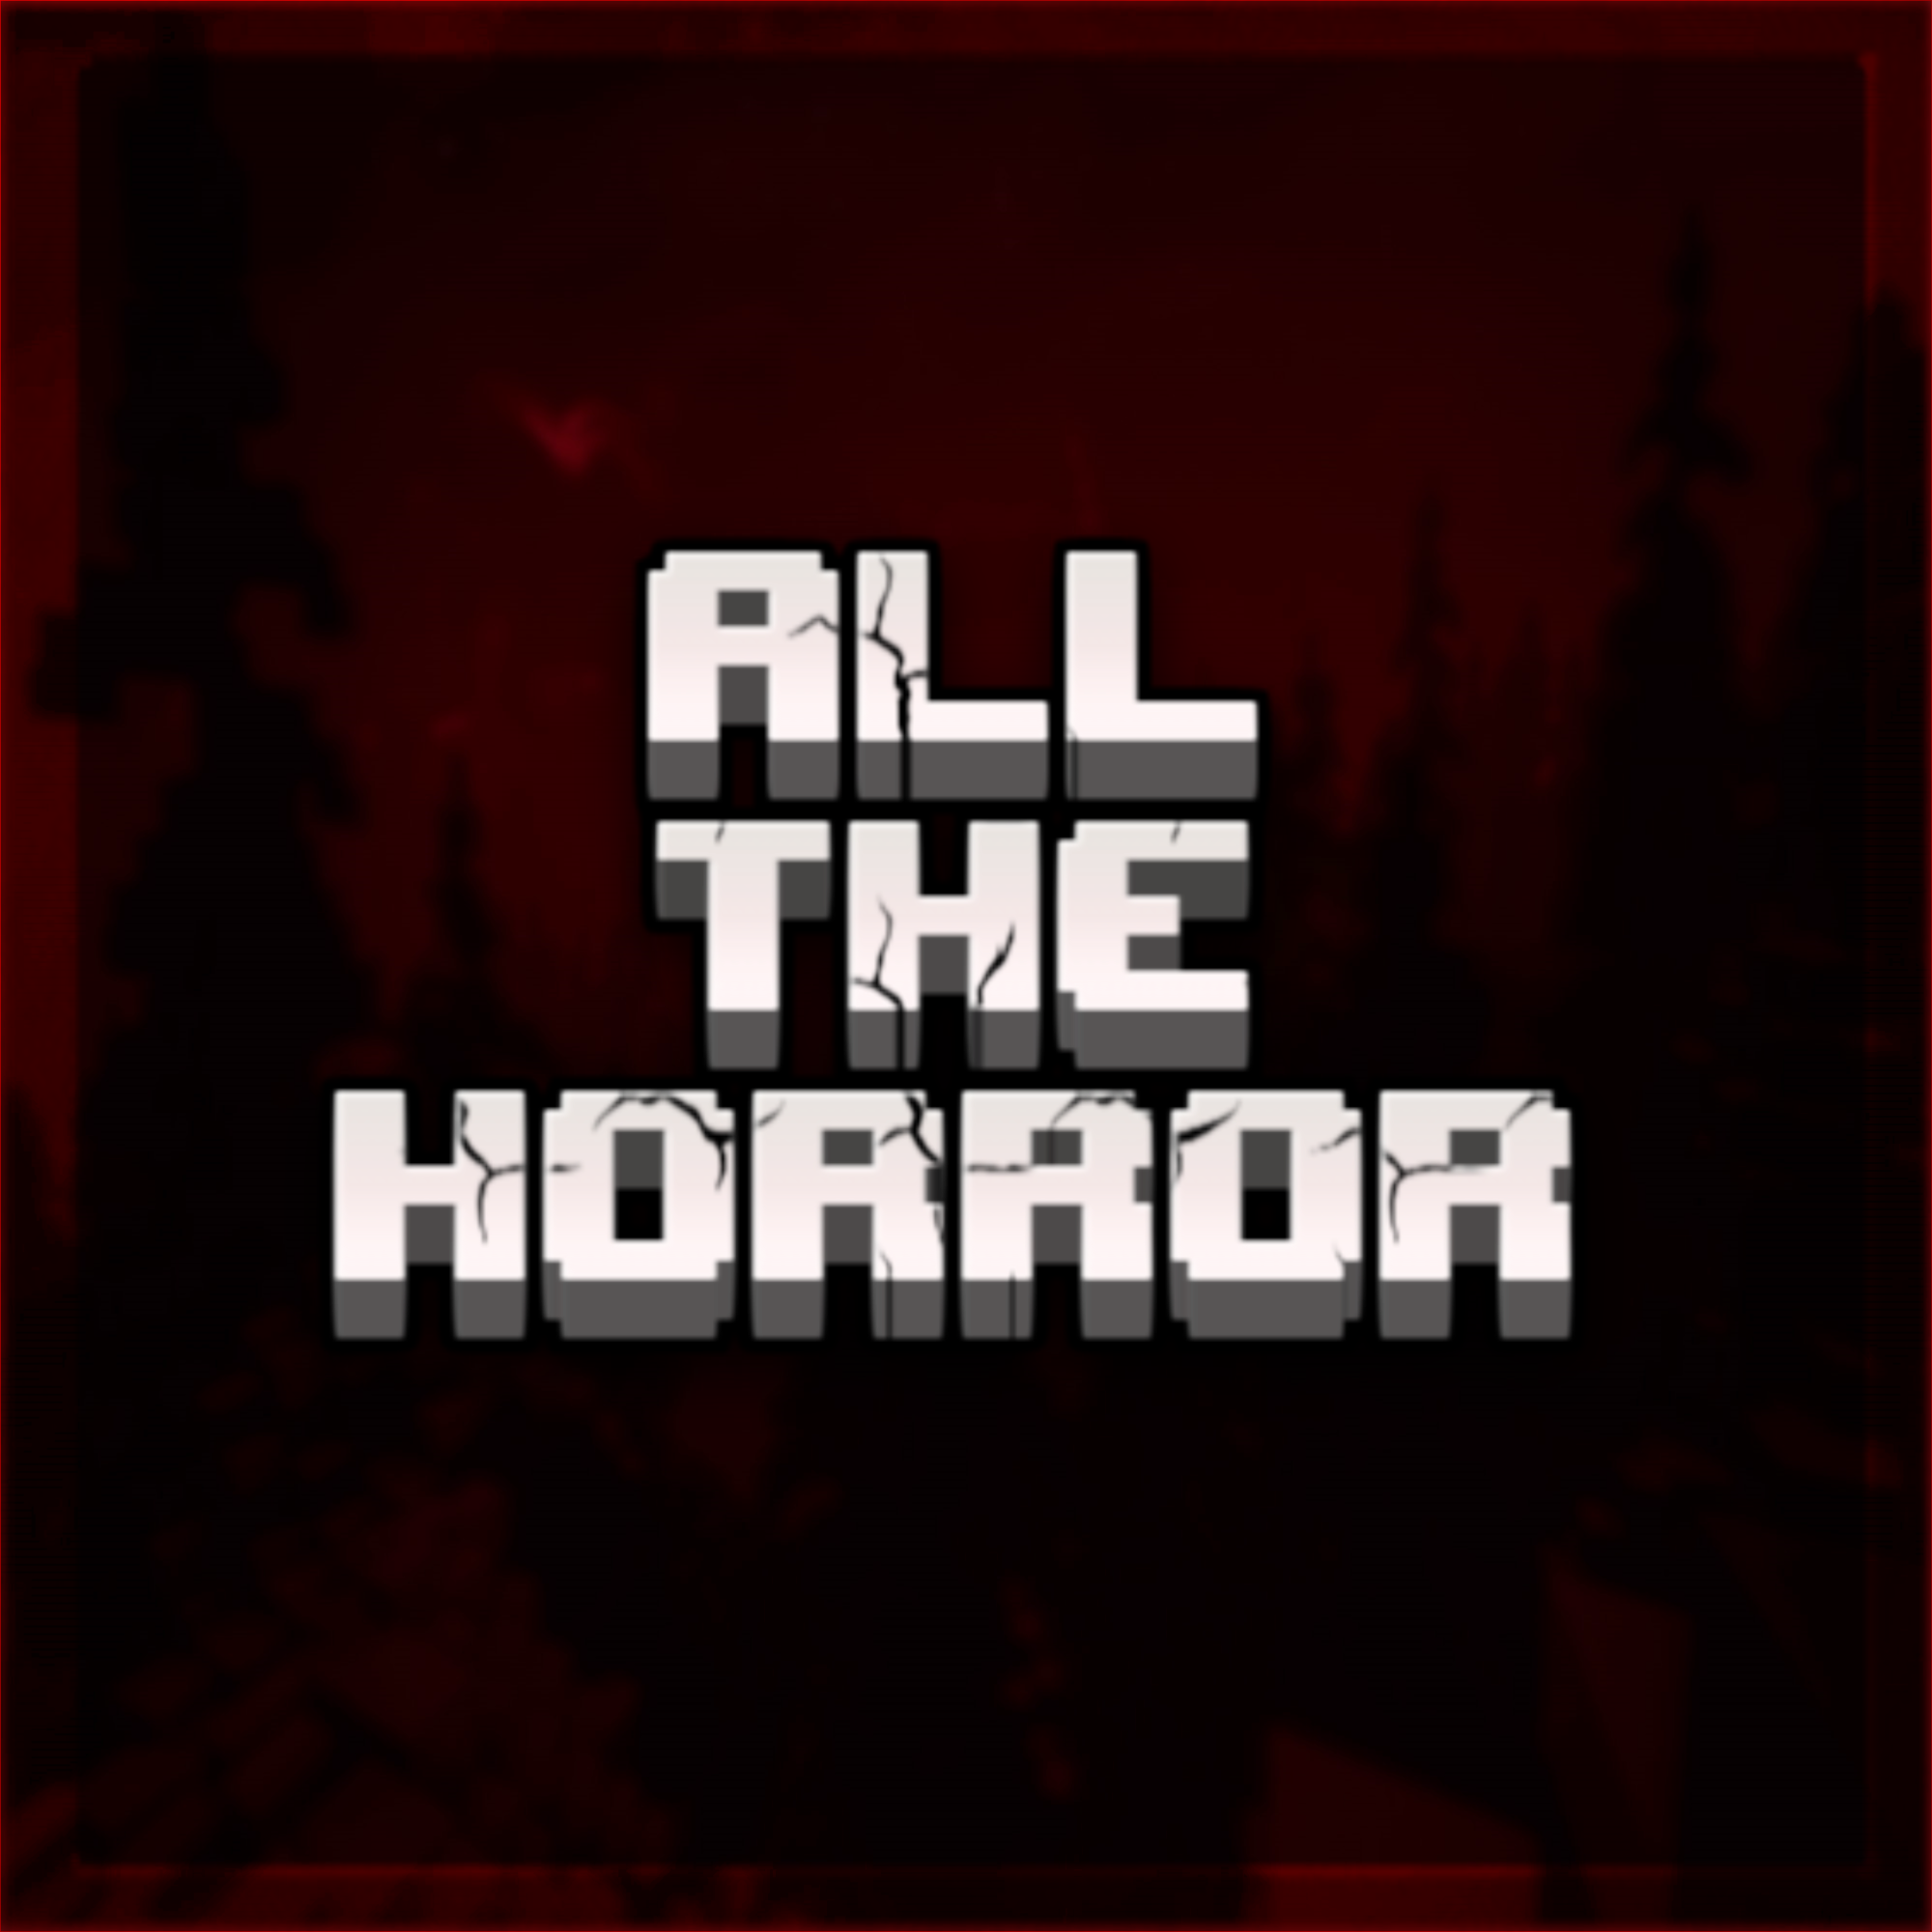 Horror Island - Minecraft Modpacks - CurseForge